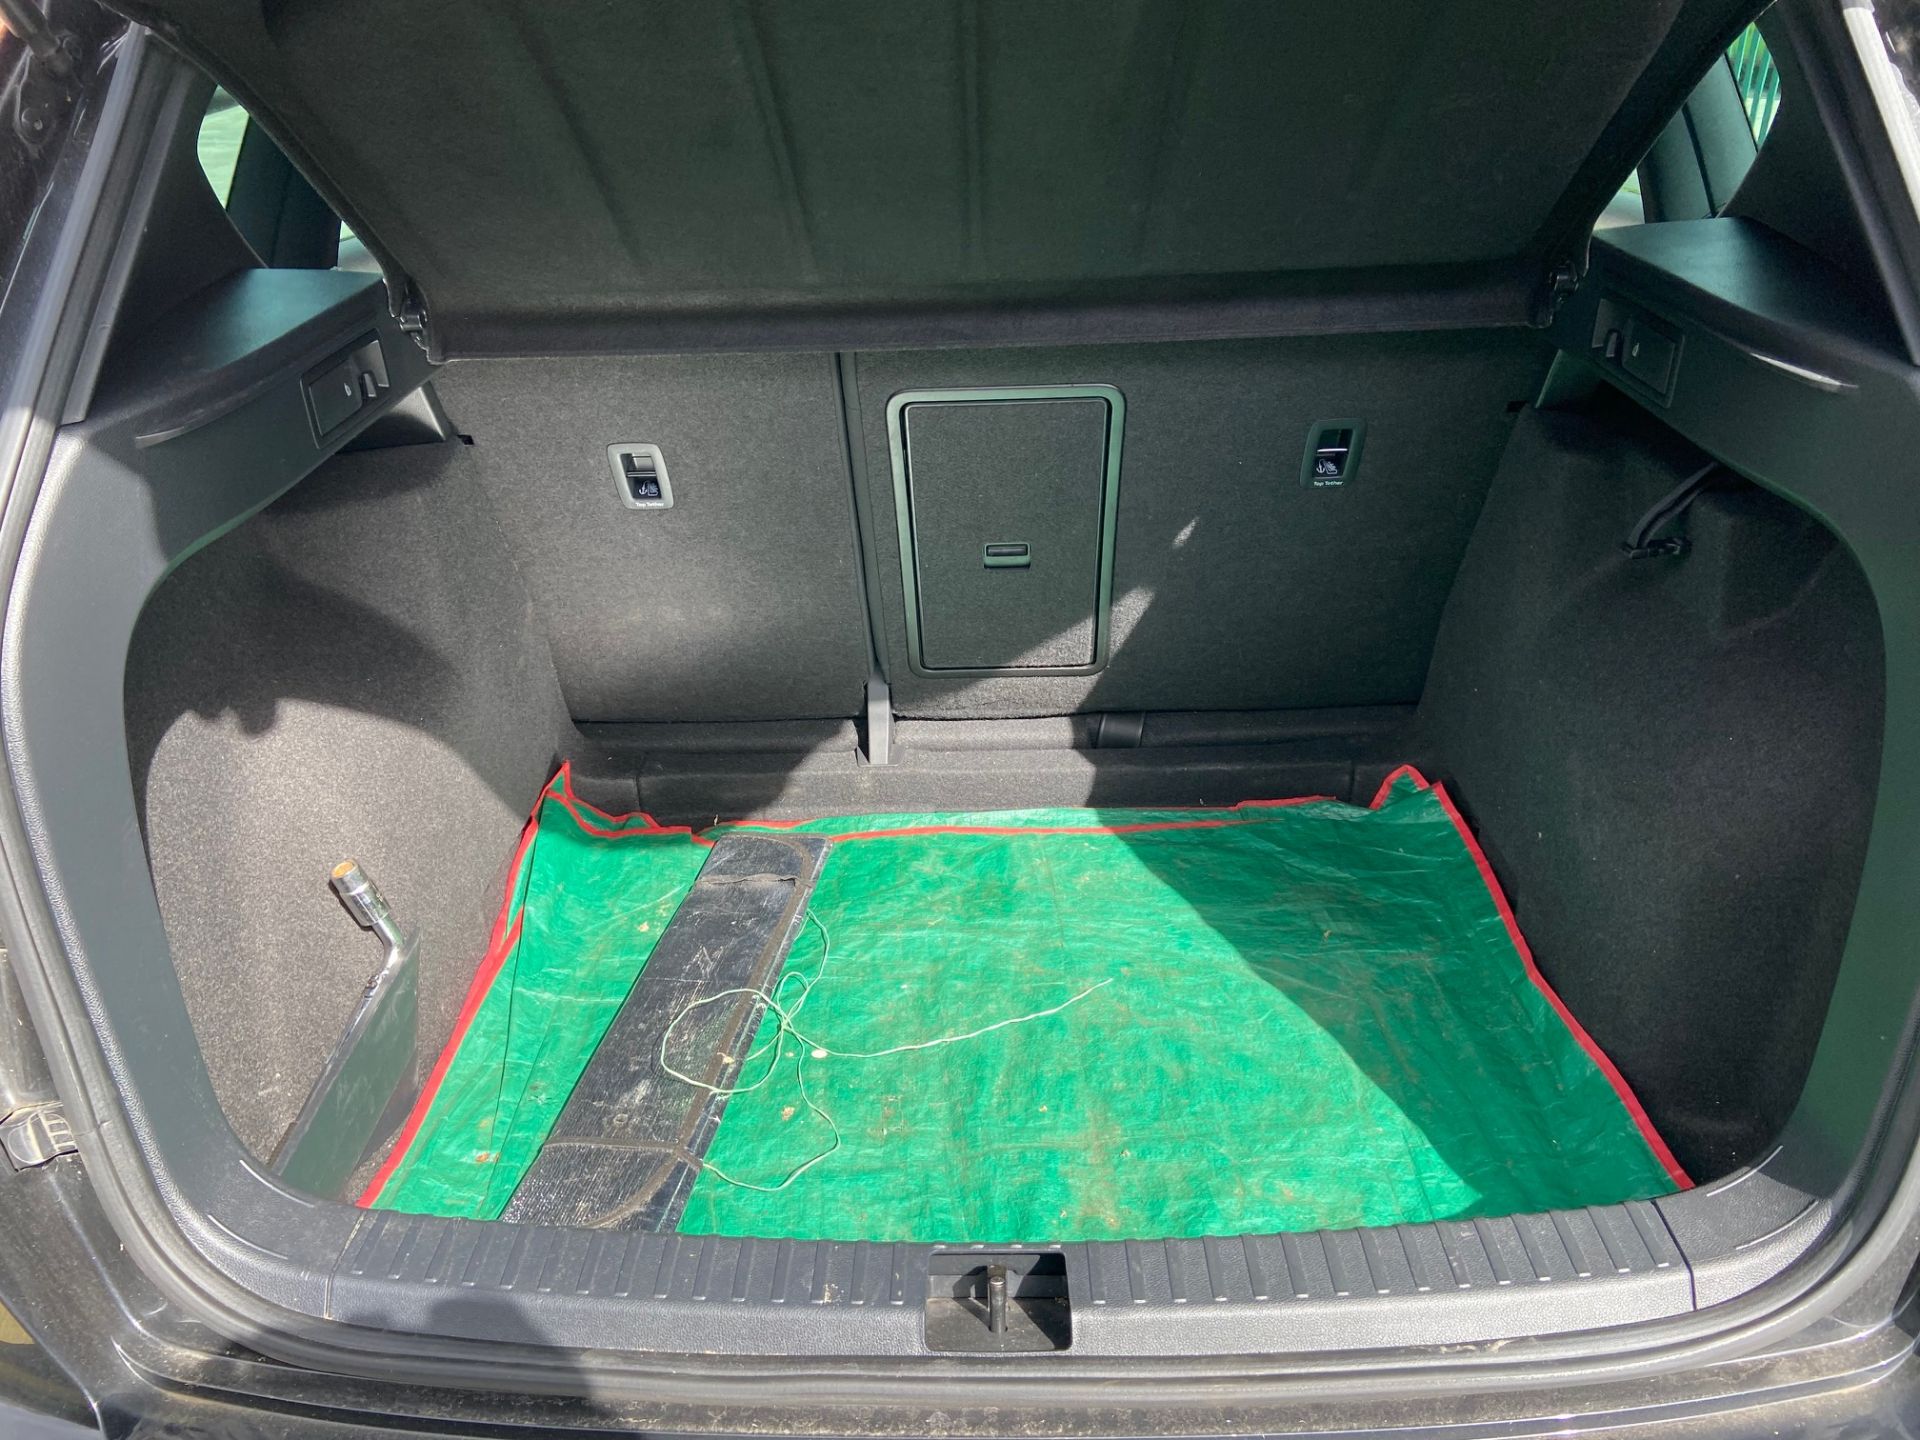 SEAT ATECA (YOM 2019) FR SPORT TSi 4 DRIVE 2.0 five door hatchback - petrol - black. - Image 10 of 13